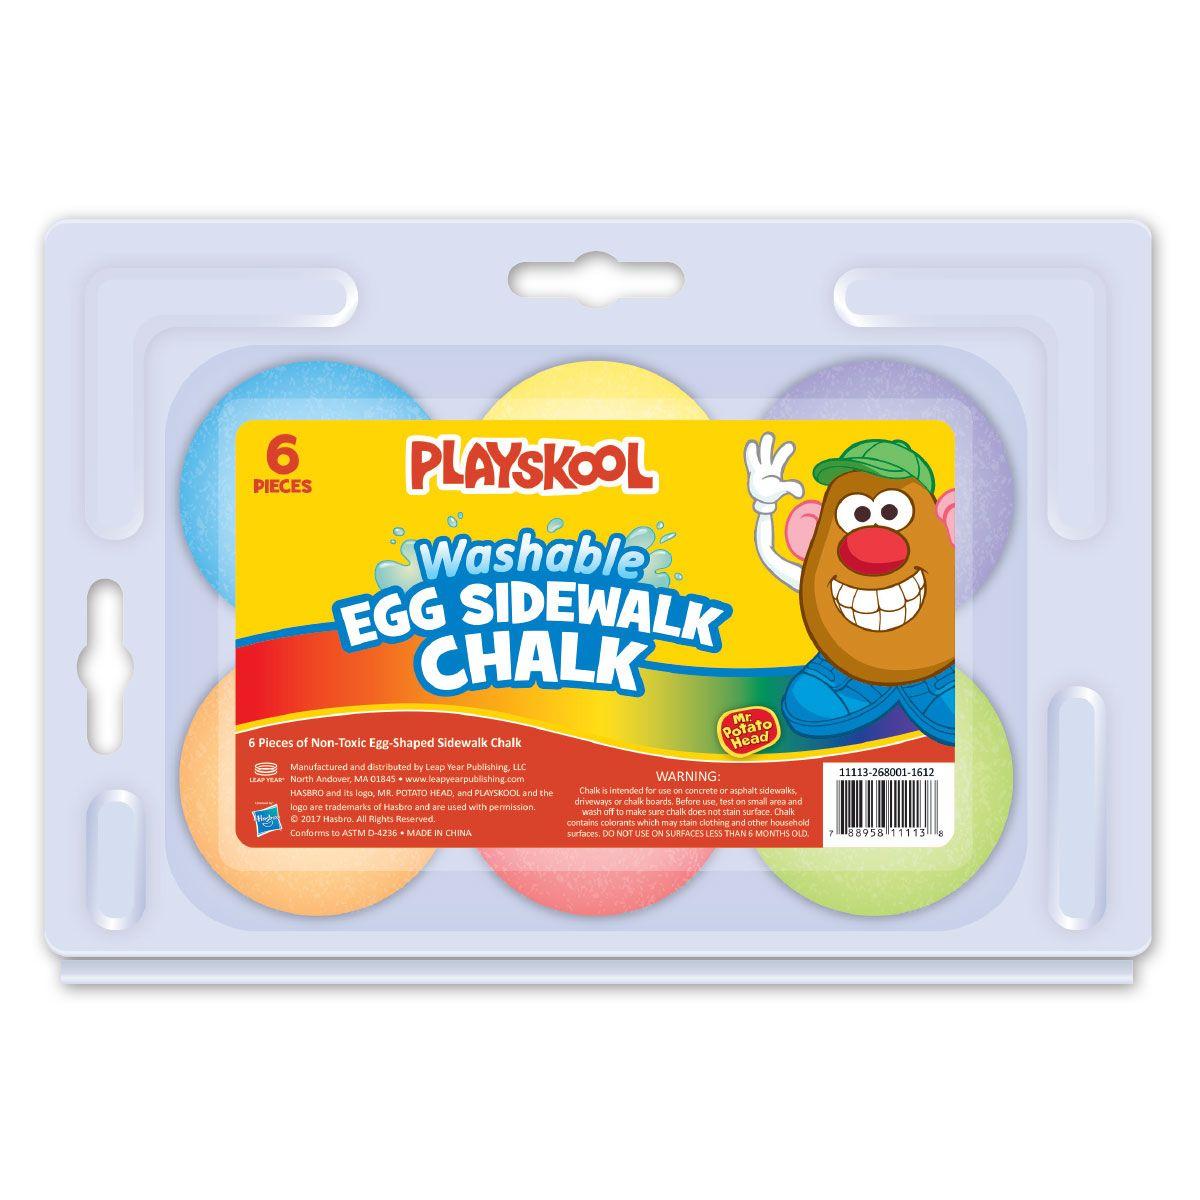 Playskool Logo - Playskool Mr. Potato Head 6 Count Egg Shaped Sidewalk Chalk